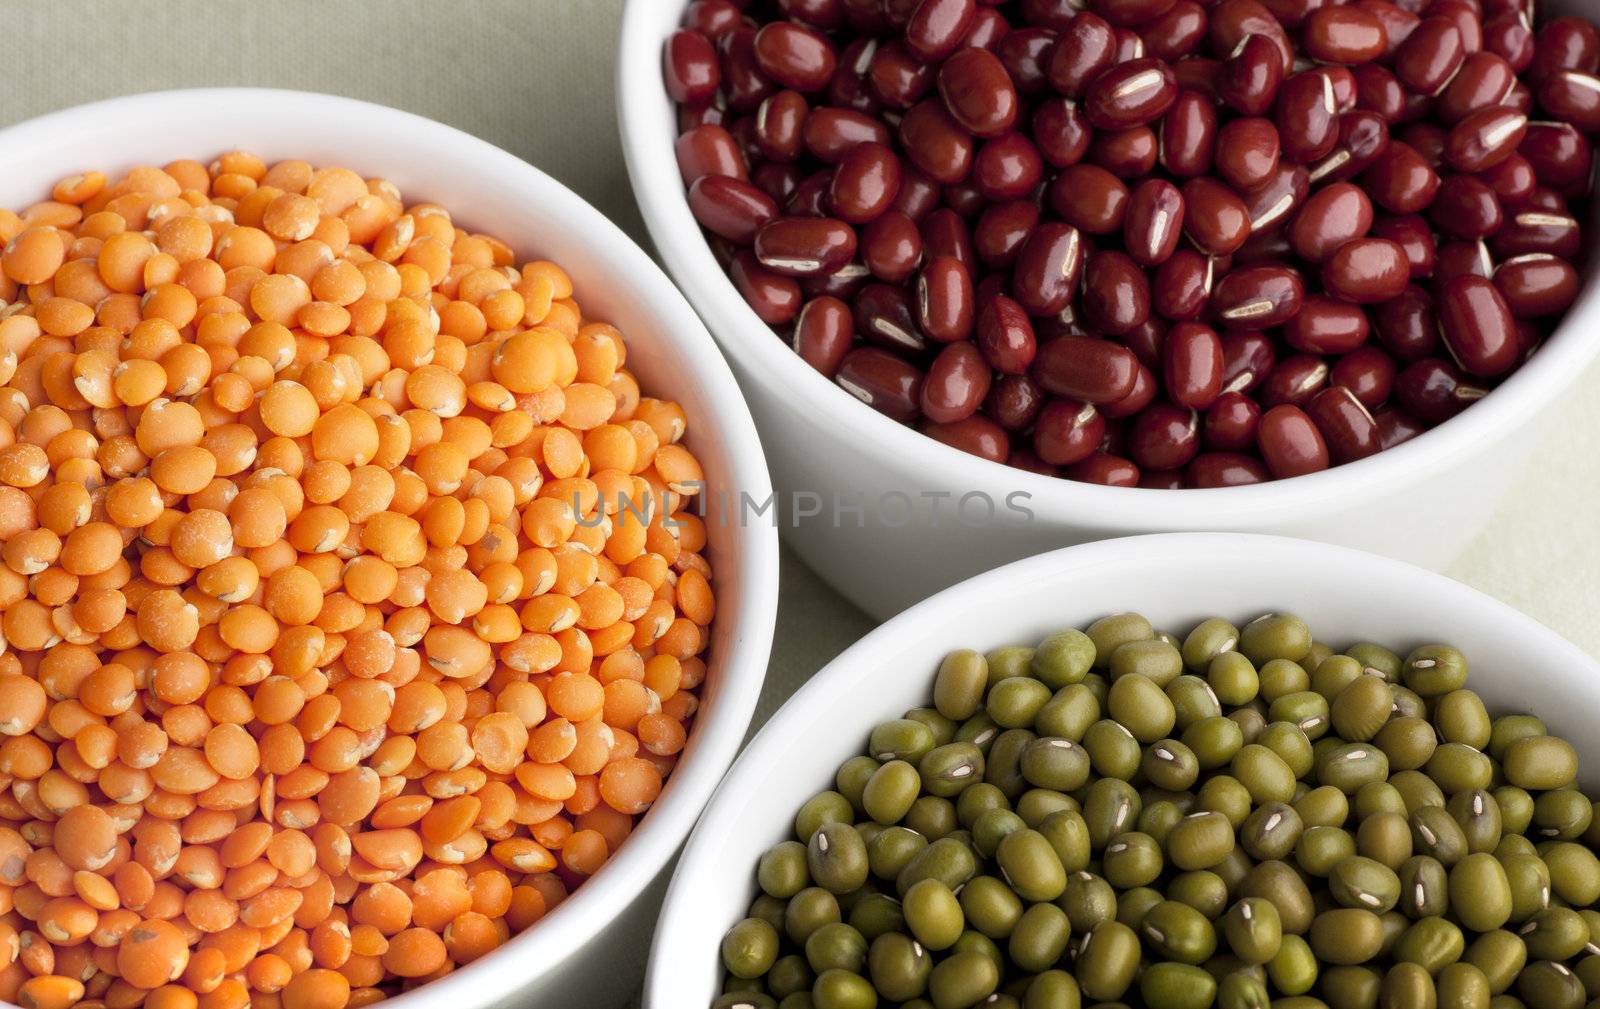 Three Types of Beans by charlotteLake